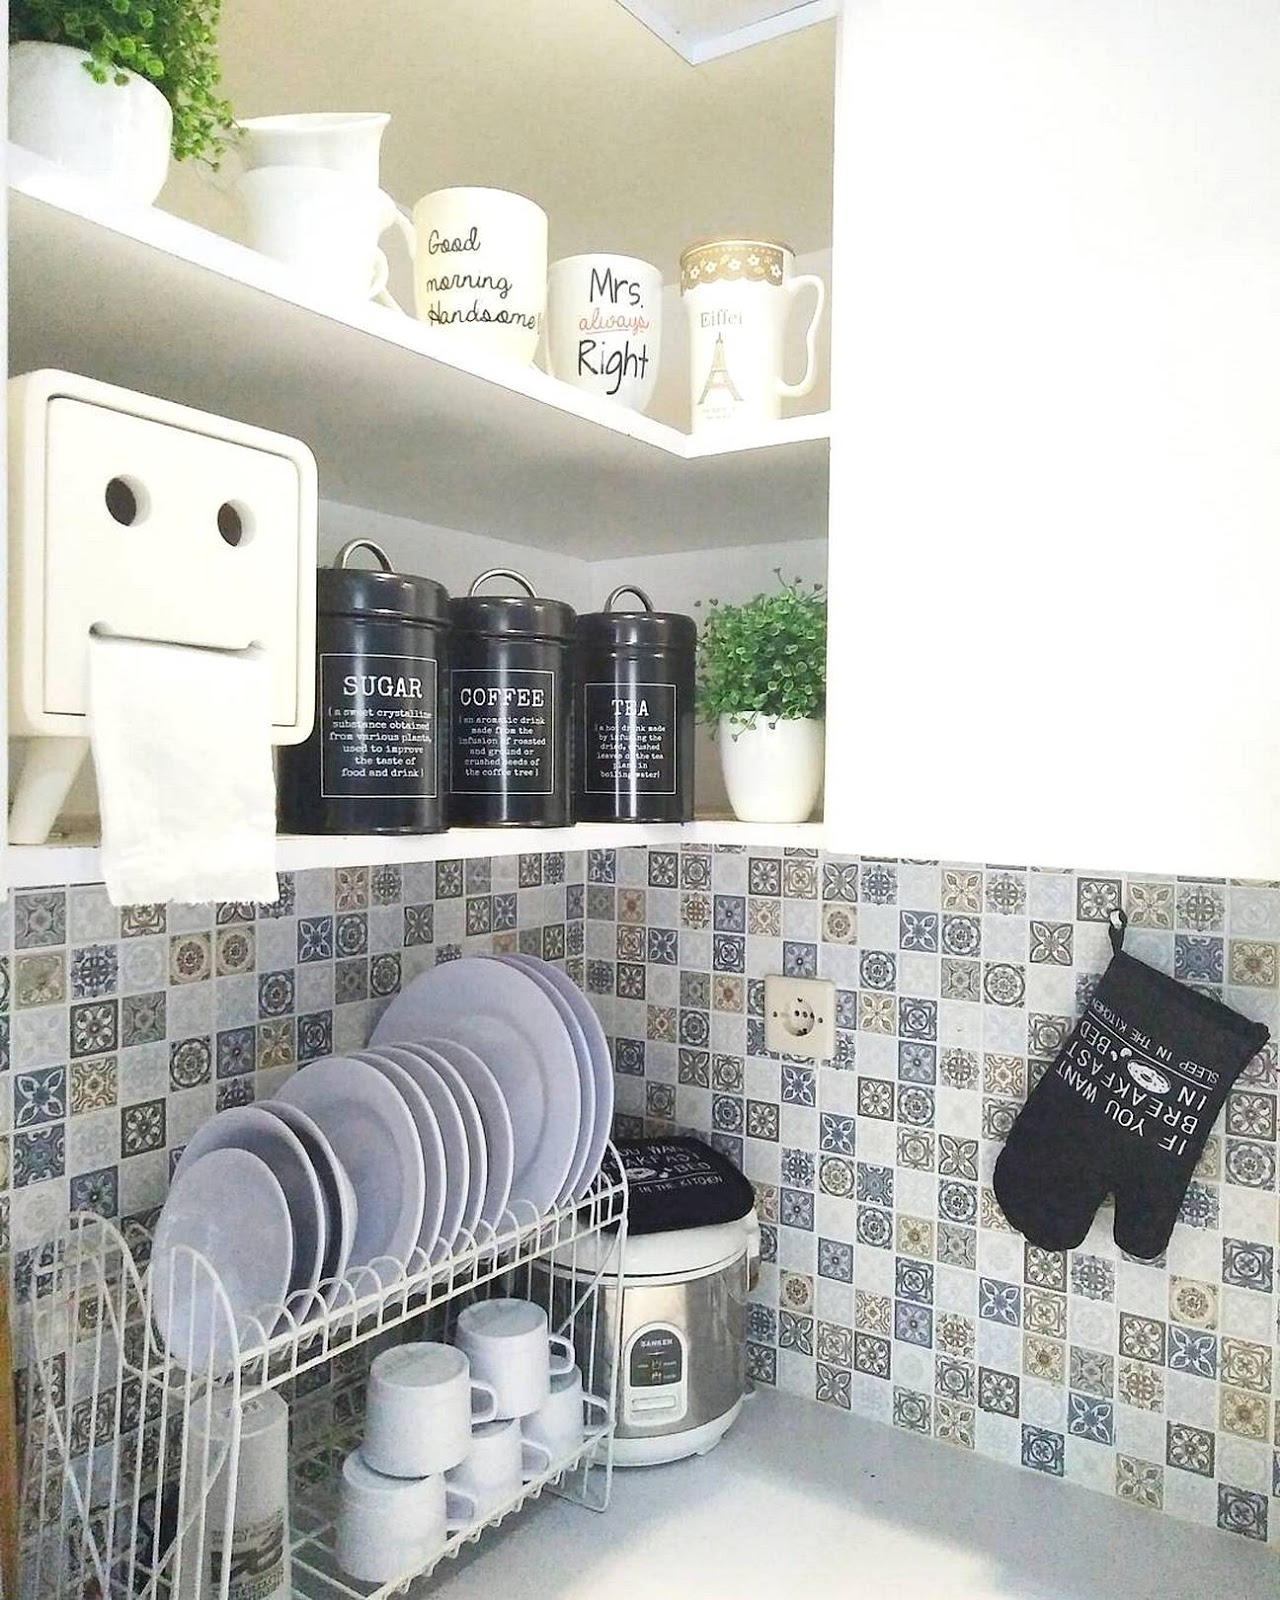 40 Motif Keramik Dinding Dapur Minimalis Modern Yang Terbaru